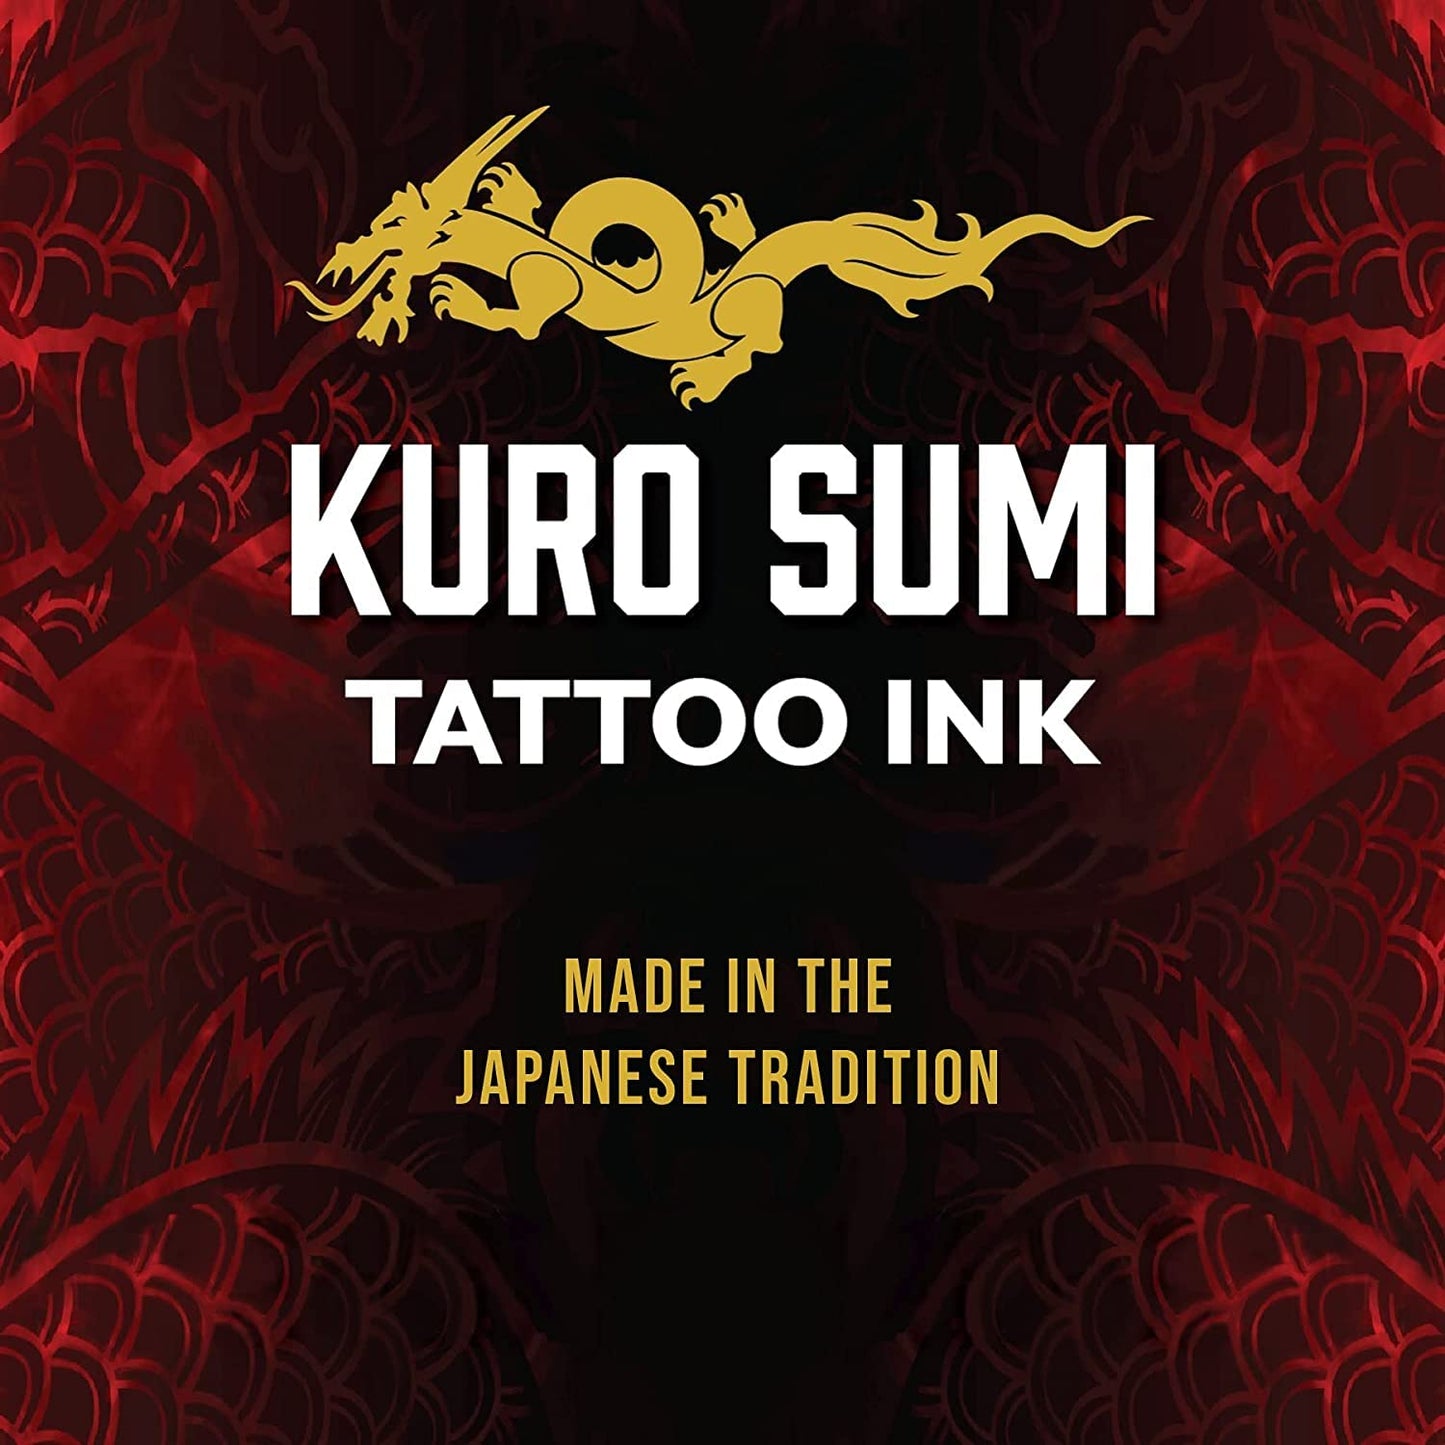 Kuro Sumi Outlining Ink